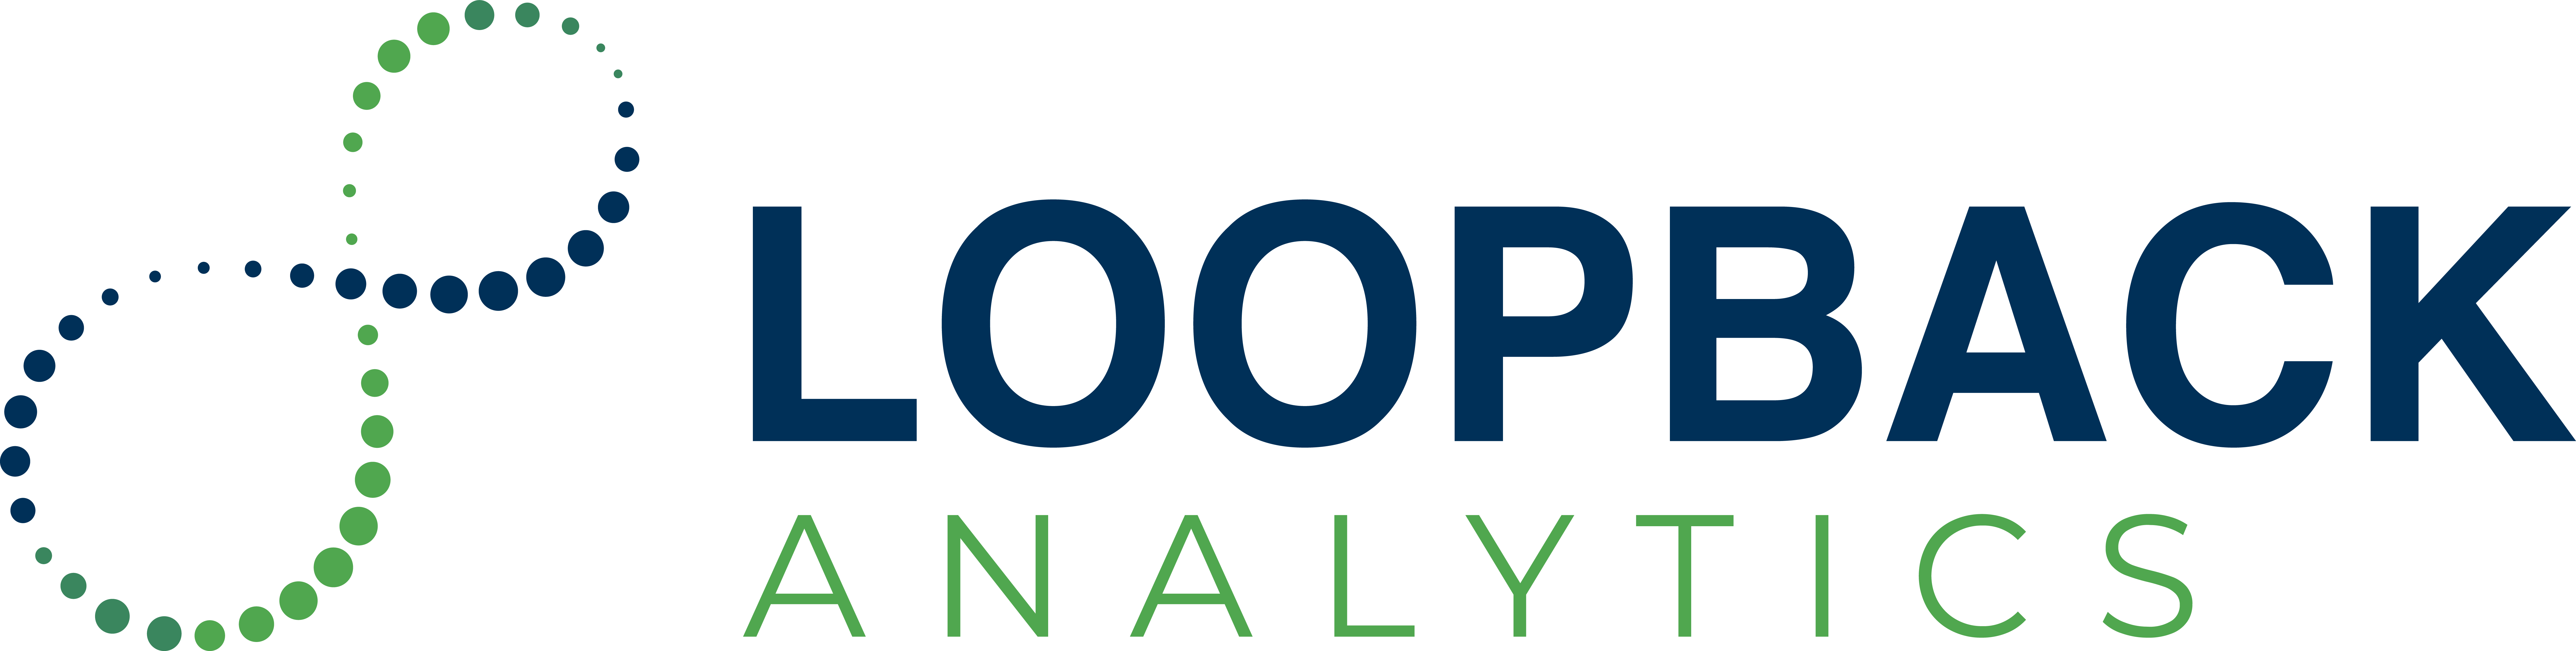 Sponsor Logo - Loopback Analytics